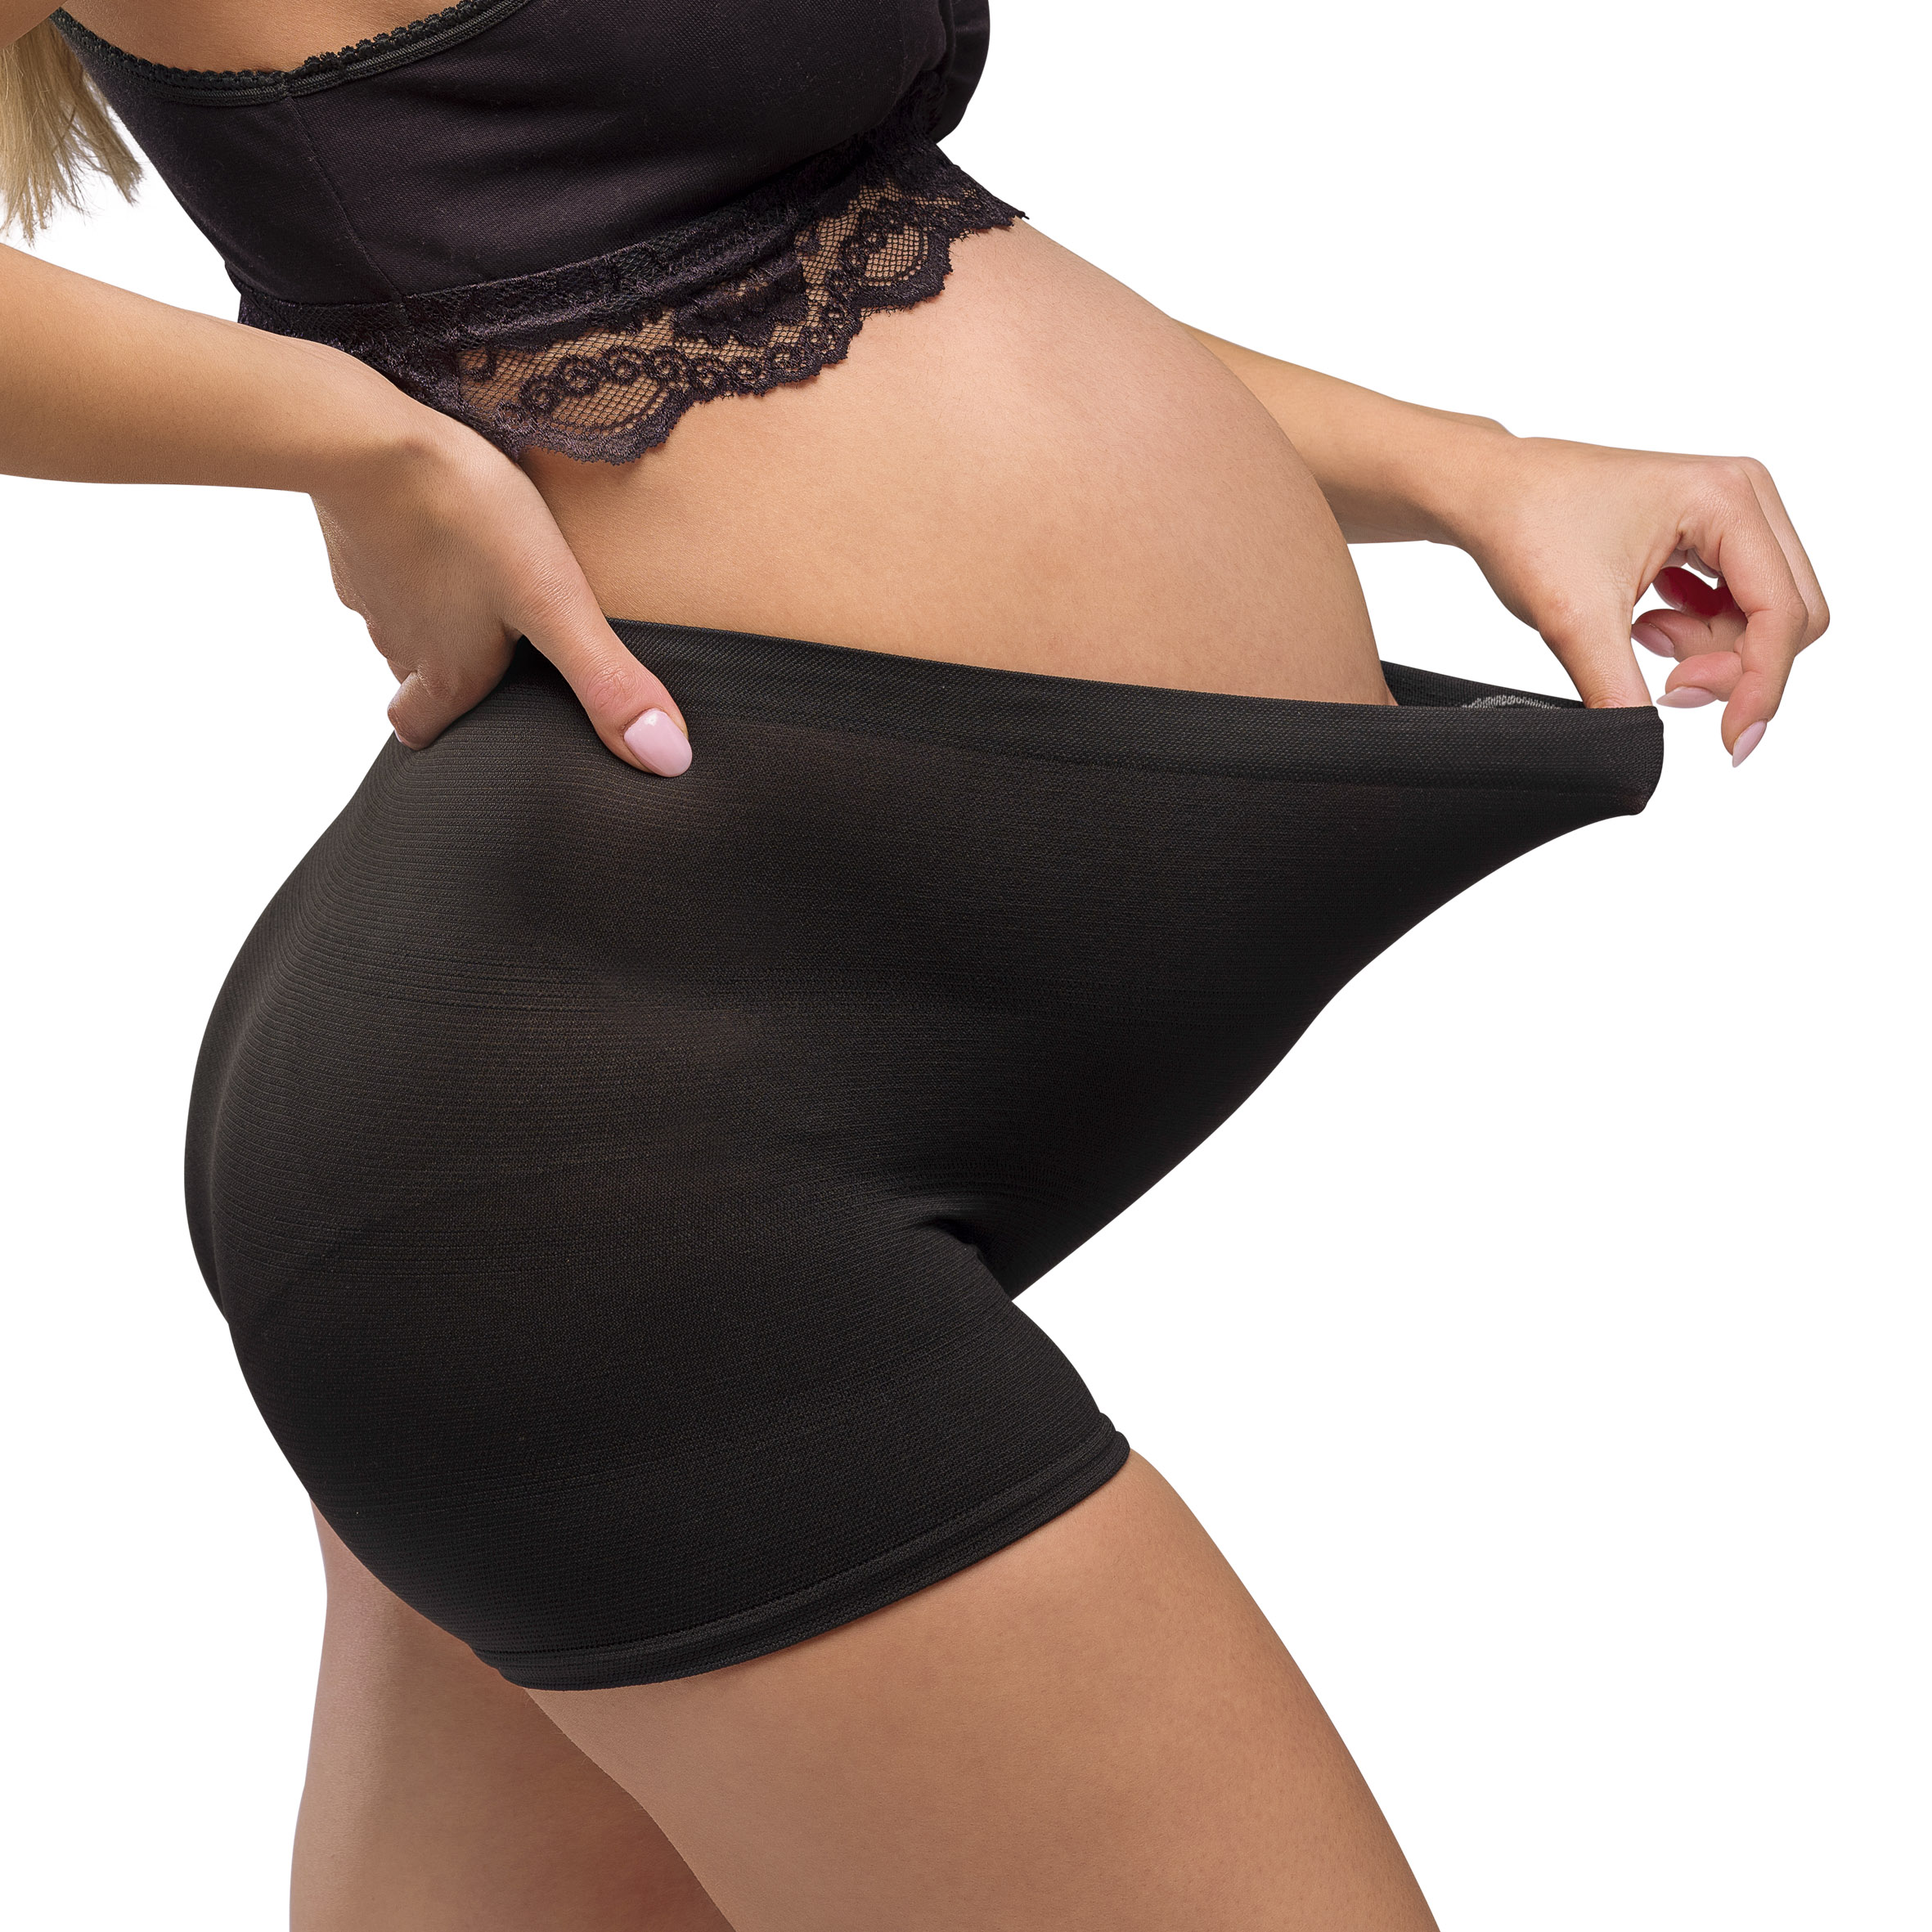 Culotte de maternité Blanc de Carriwell, Slips de grossesse : Aubert